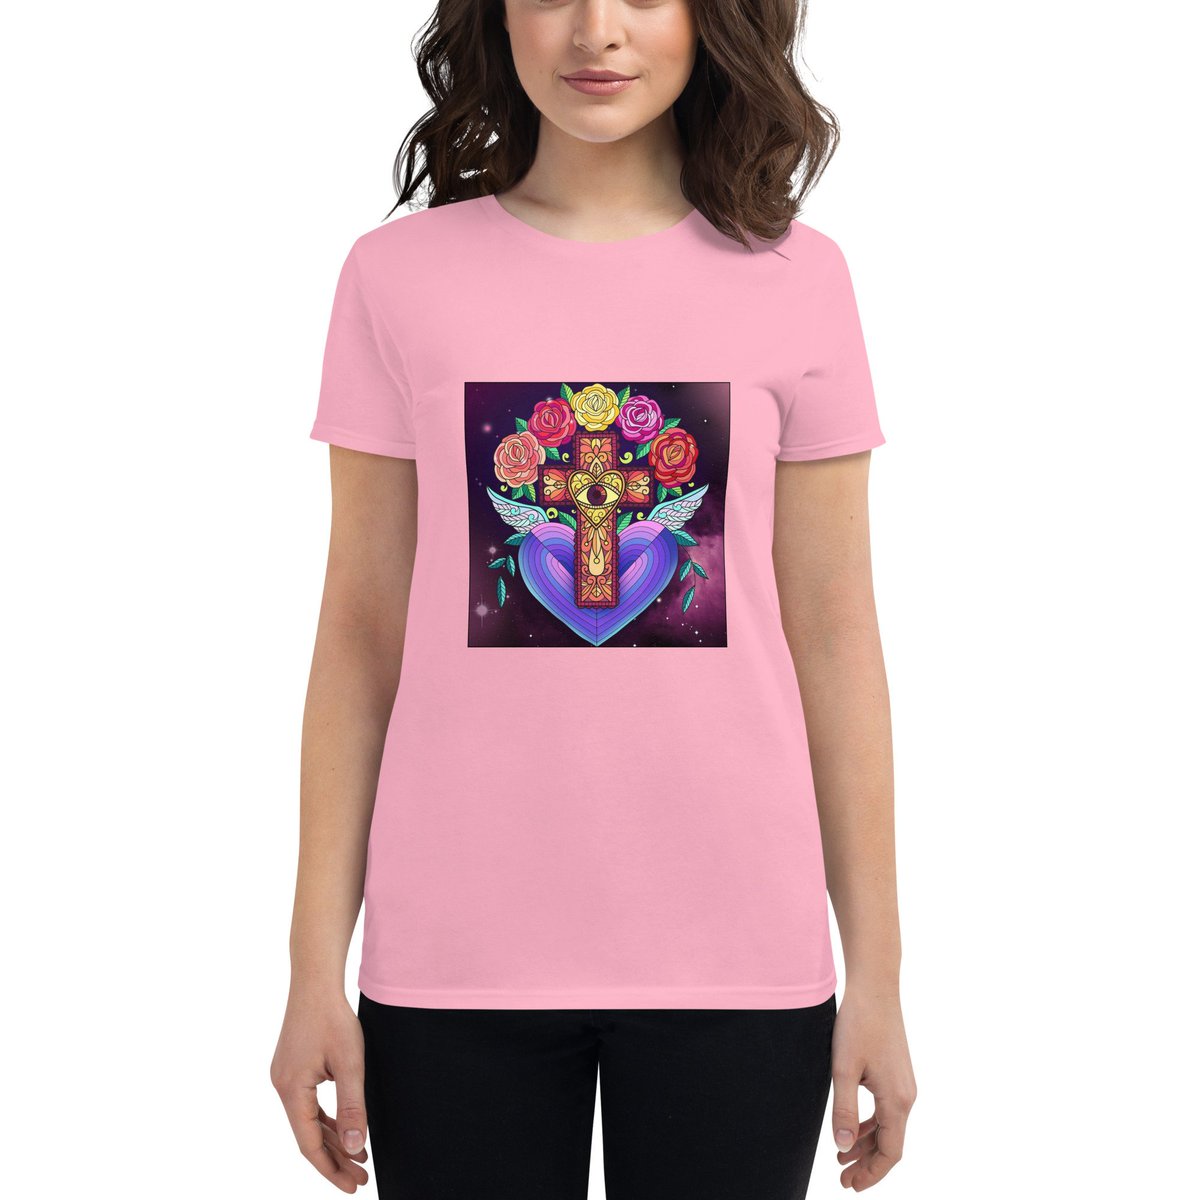 Women's short sleeve t-shirt Love 01 

Buy Now cherish777.company.site/Womens-short-s…

#tshirt #shopping  #sell #womantshirt #girltshirt